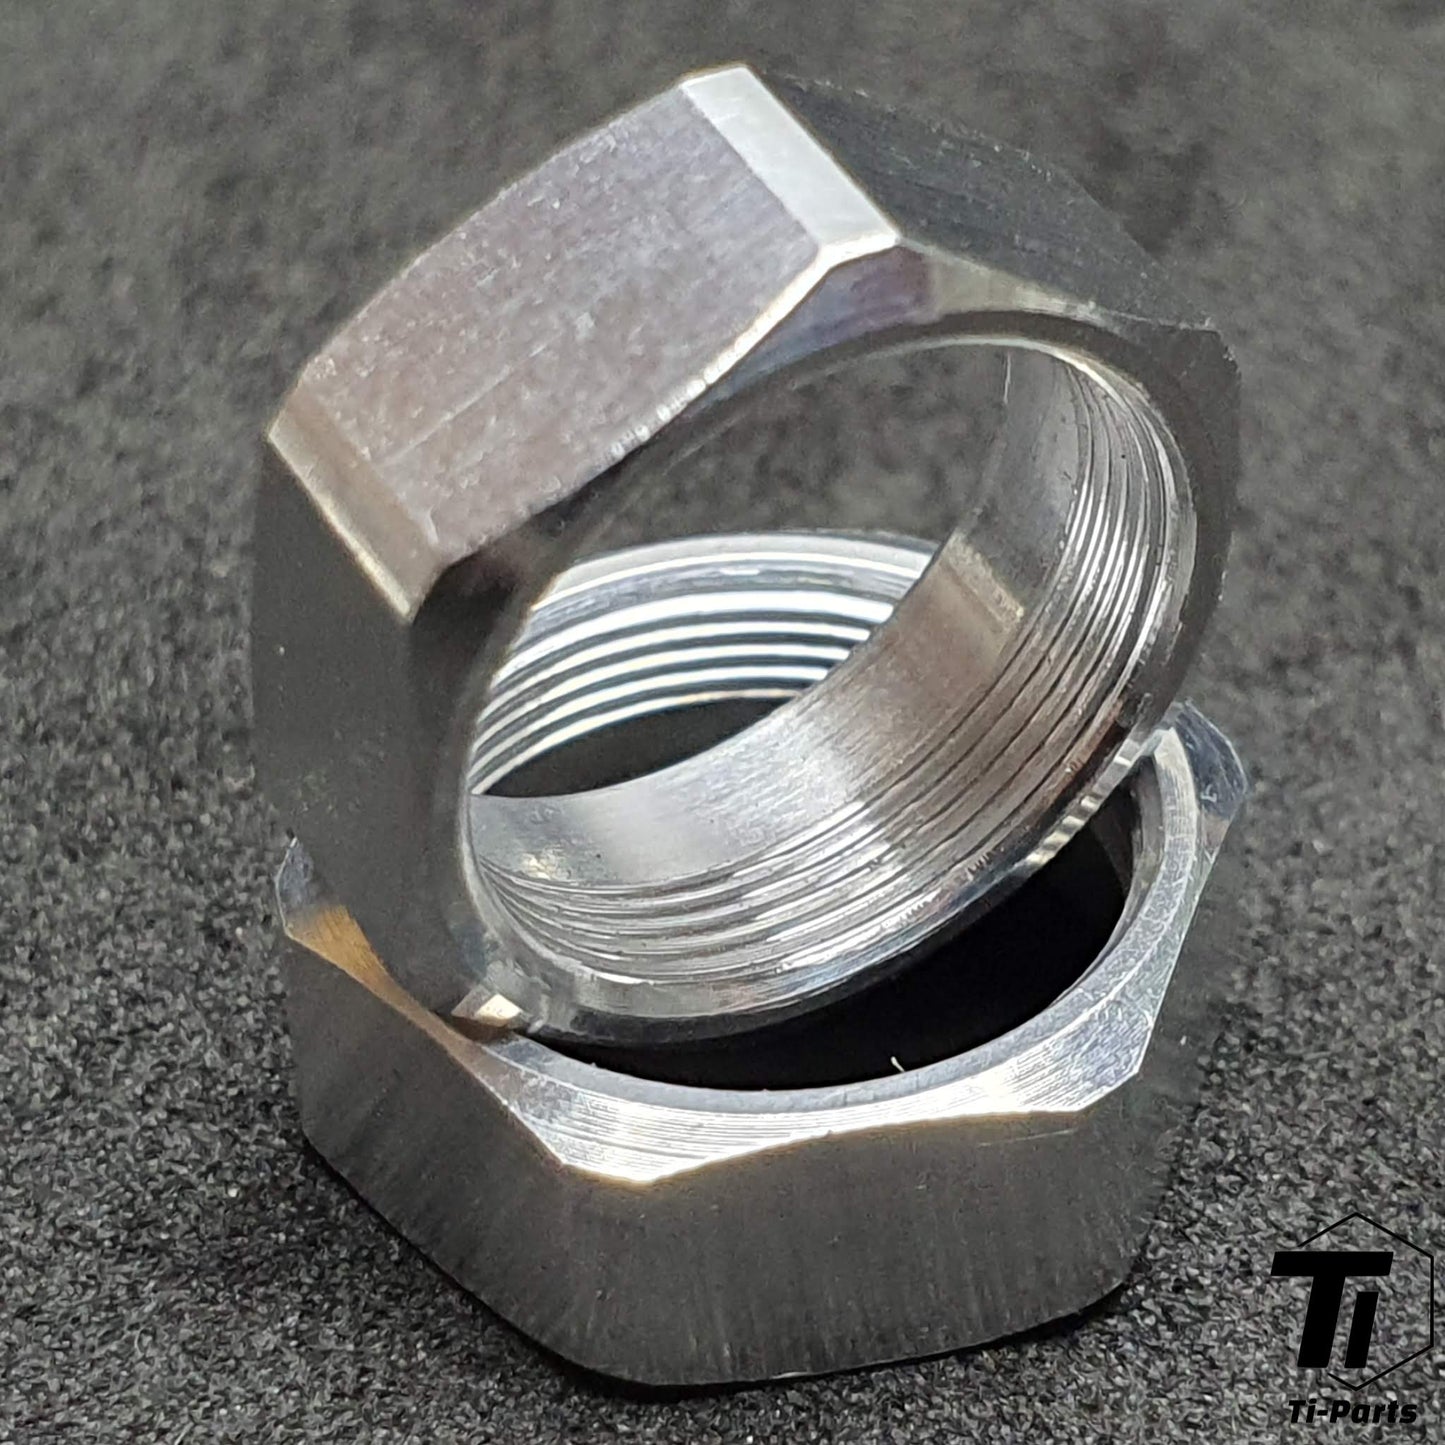 Titanová osa pro pedál Look | Keo 2 Max Blade Carbon Ceramic Ti | Titanium 29. třídy Singapur